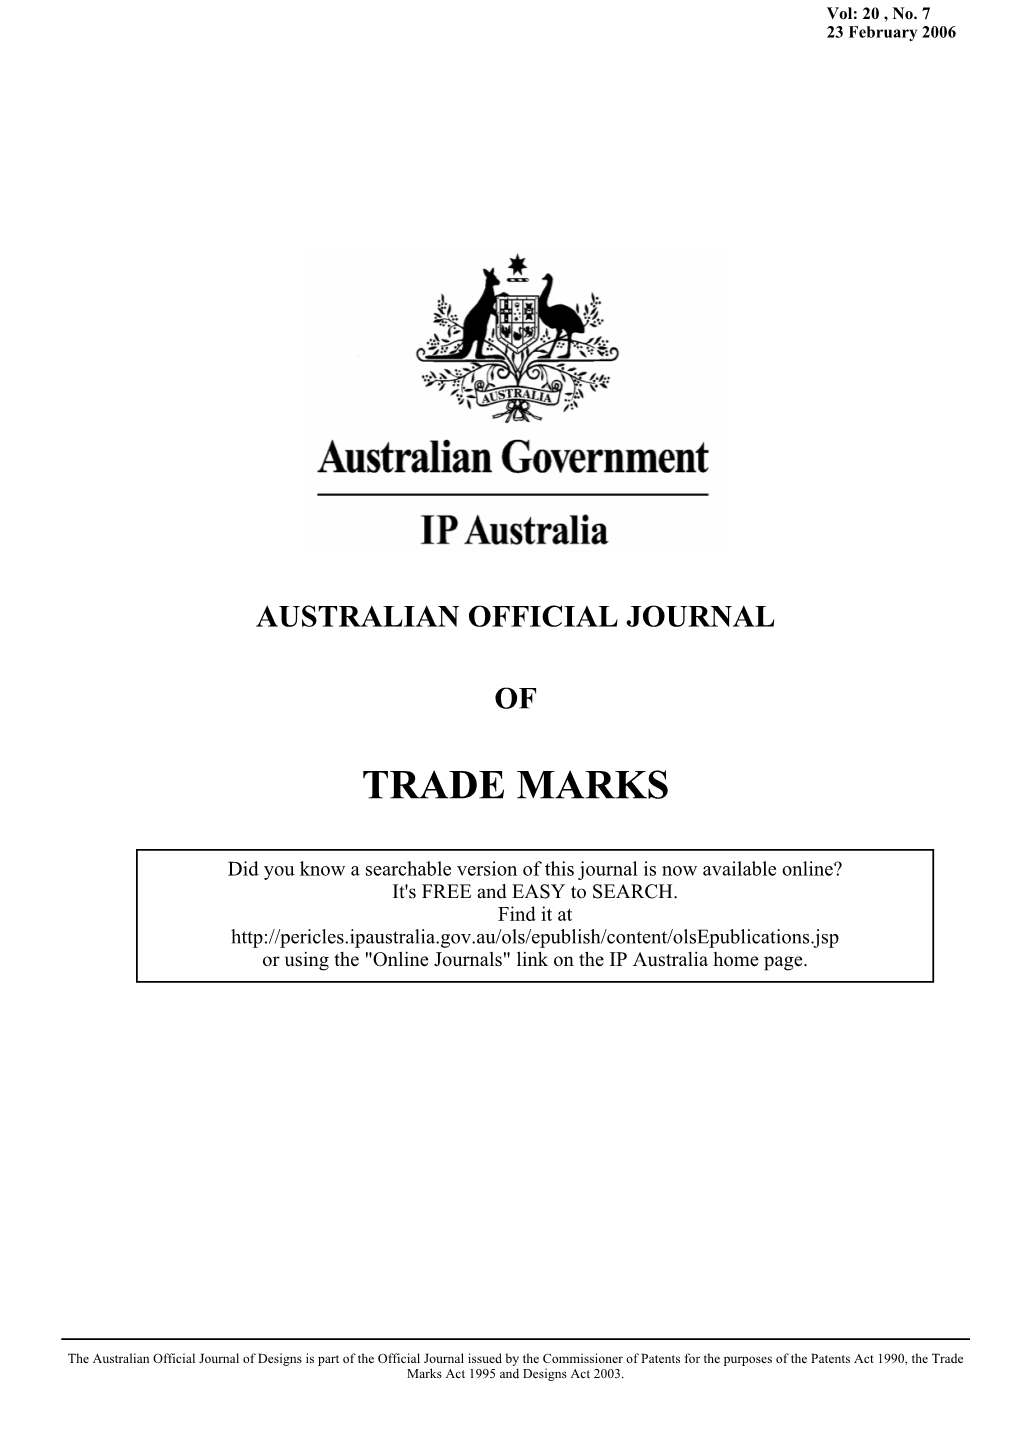 AUSTRALIAN OFFICIAL JOURNAL of TRADE MARKS 23 February 2006